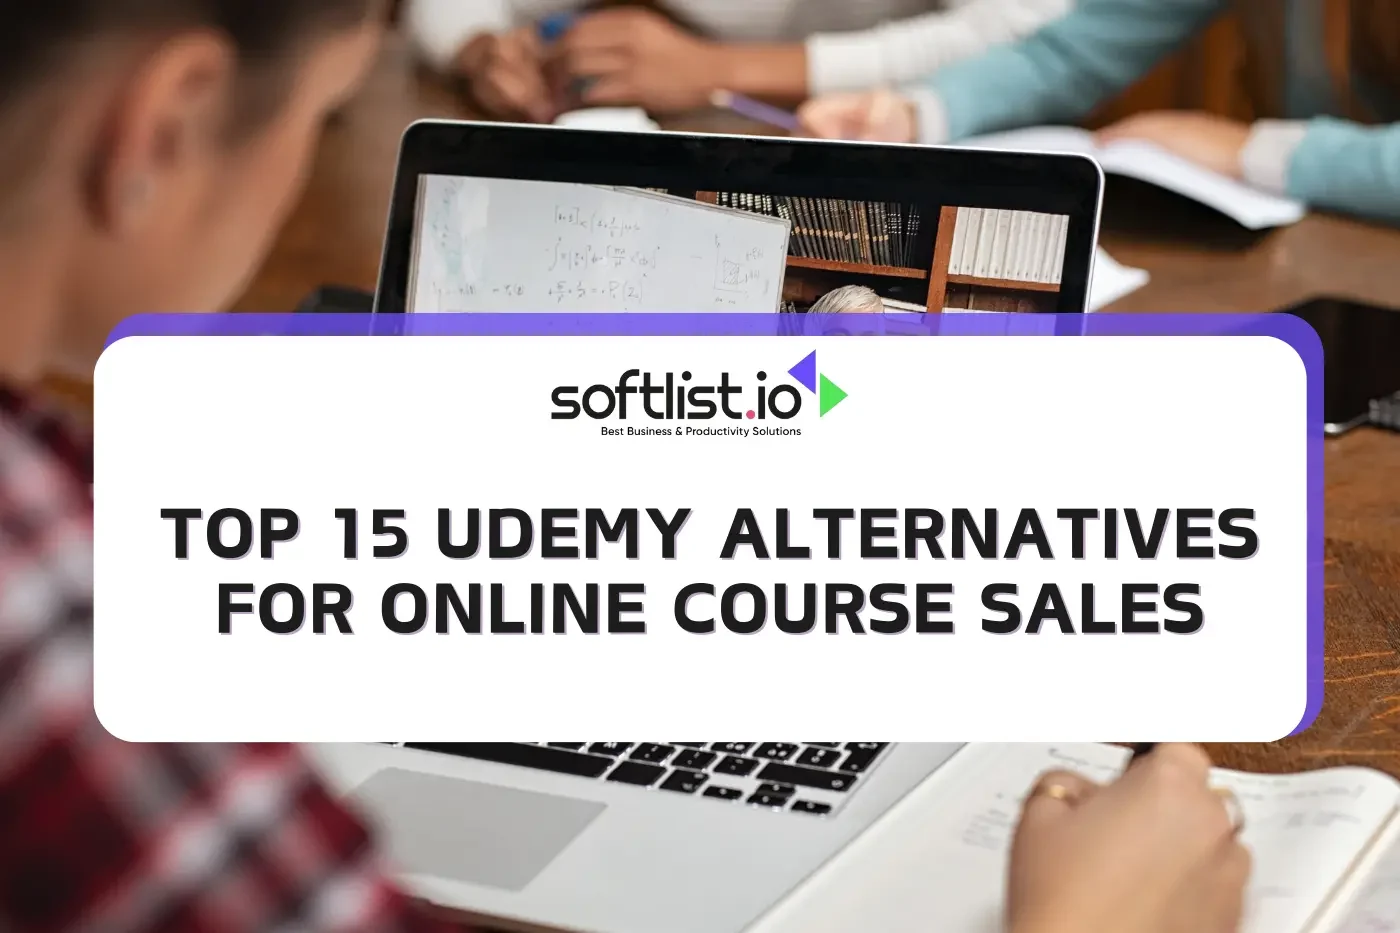 Top 15 Udemy Alternatives for Online Course Sales